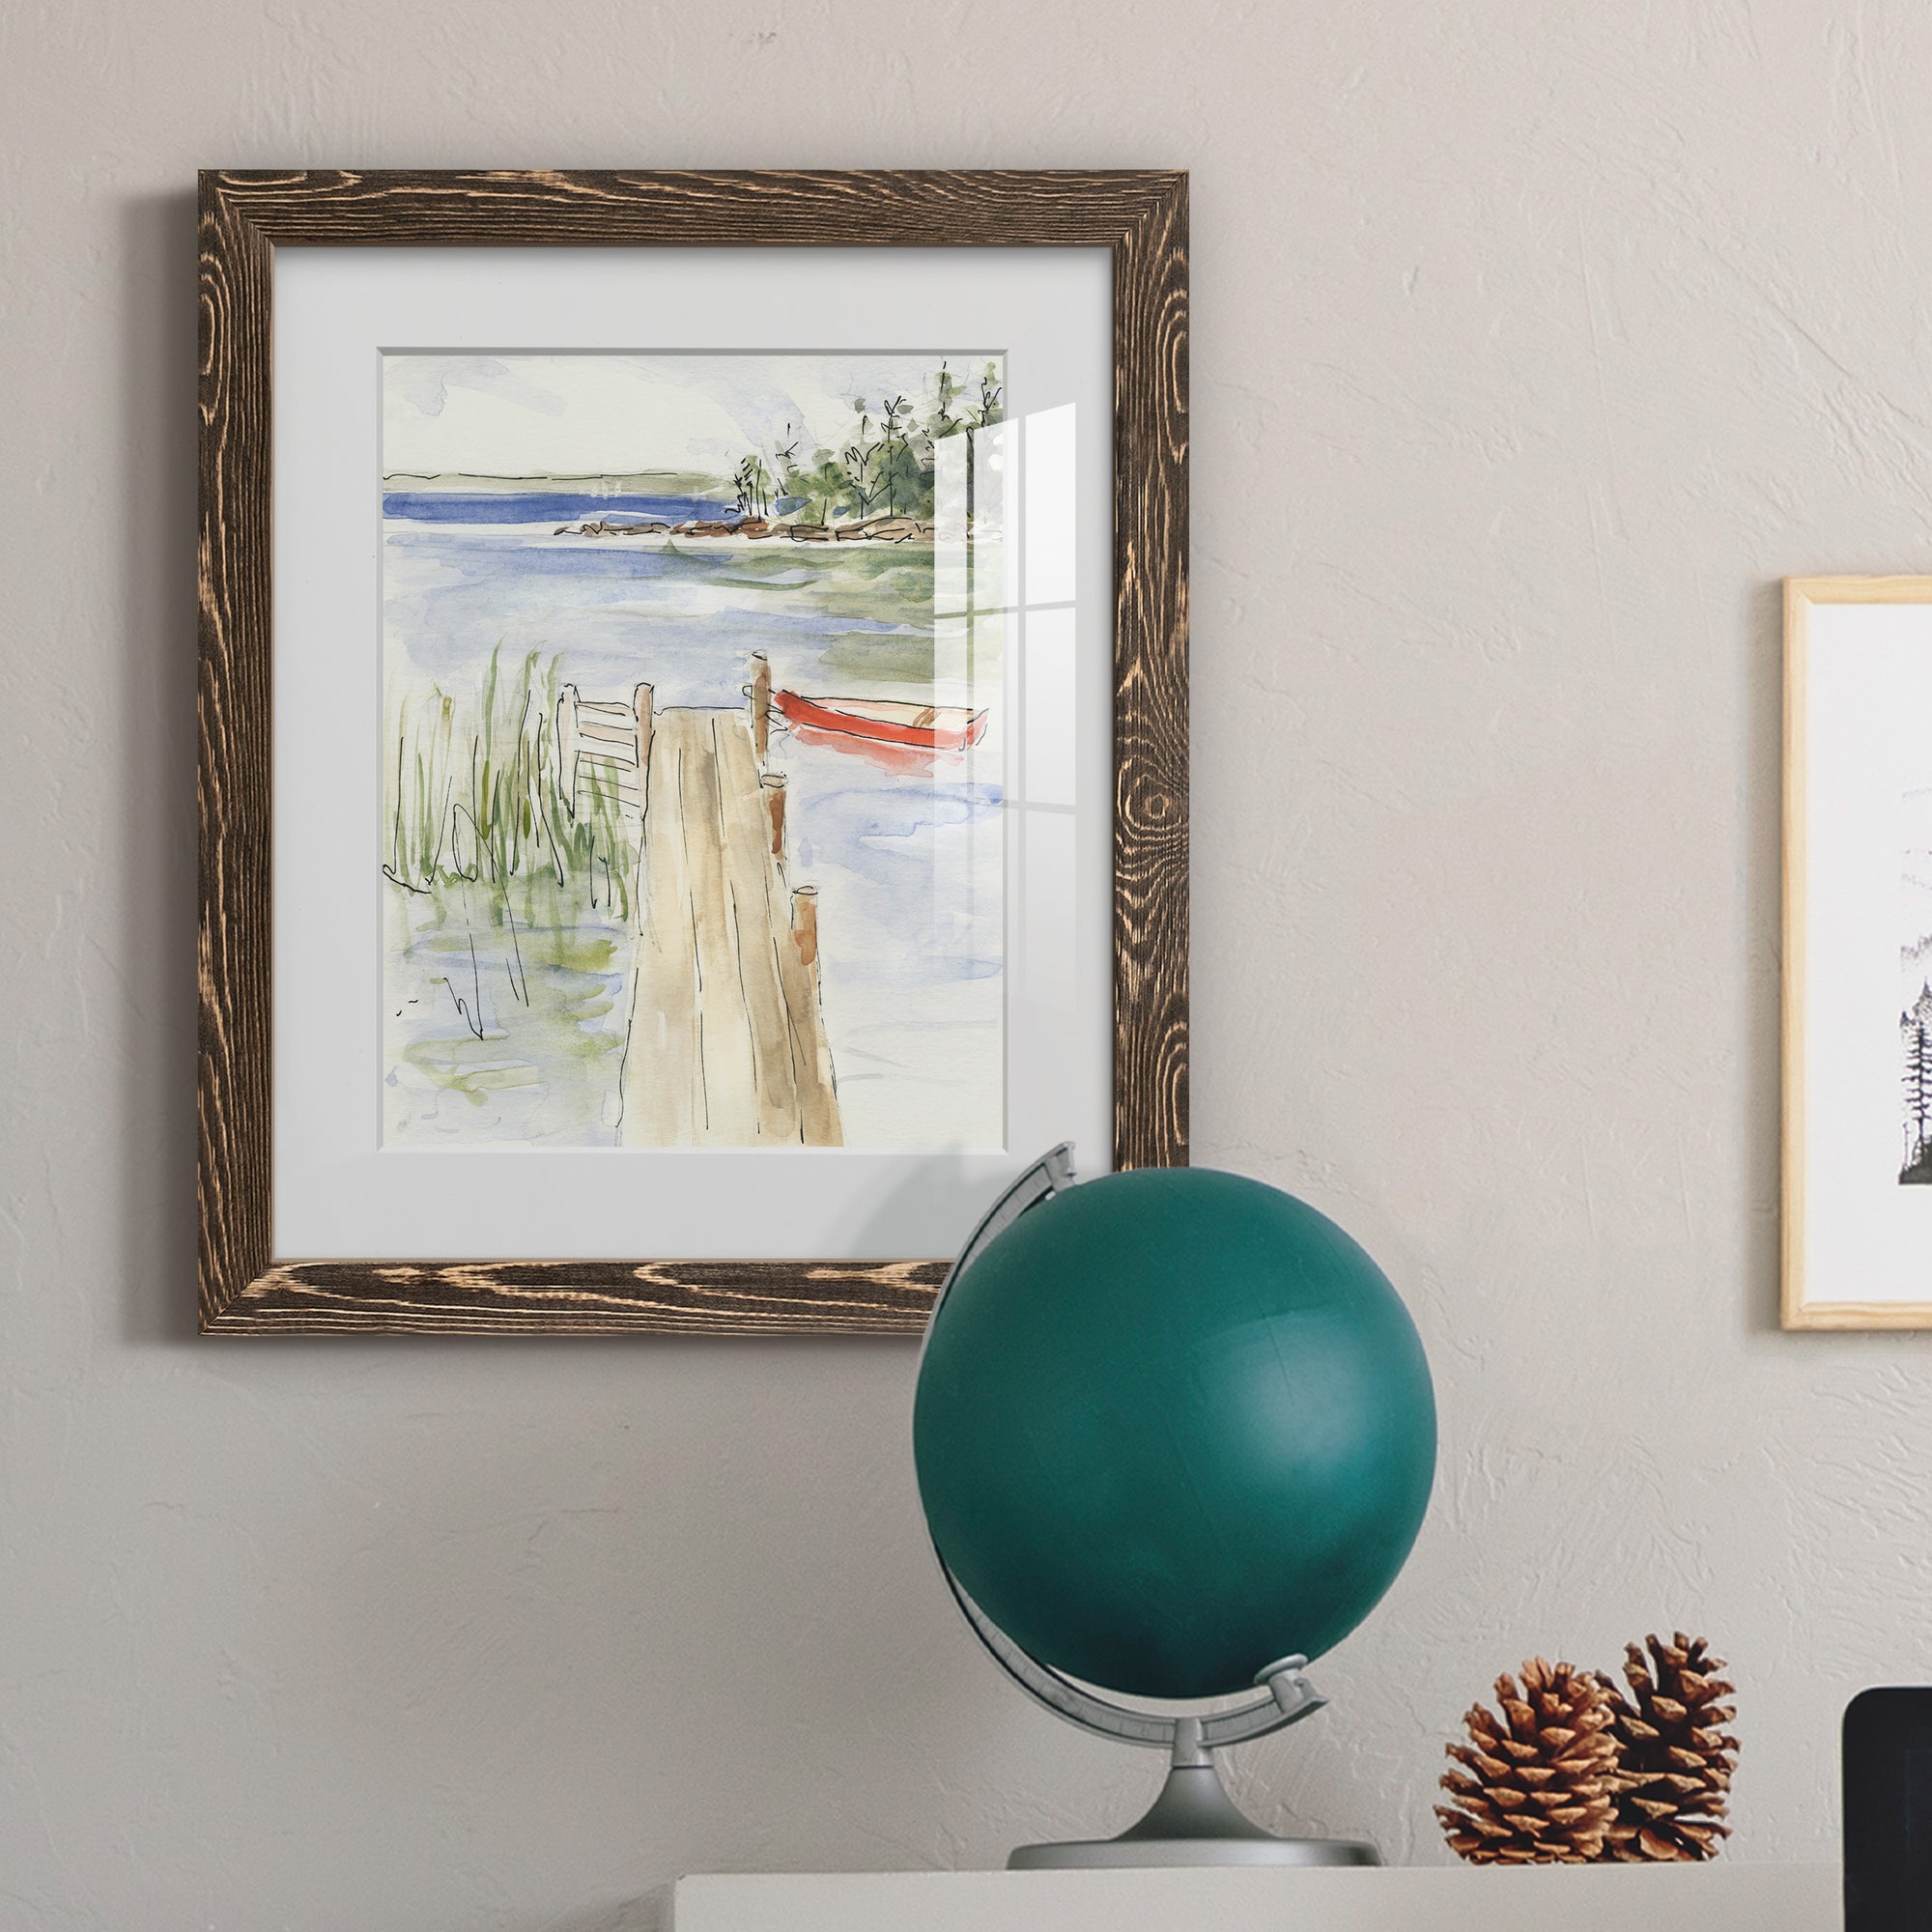 Sketchy Pier - Premium Framed Print - Distressed Barnwood Frame - Ready to Hang